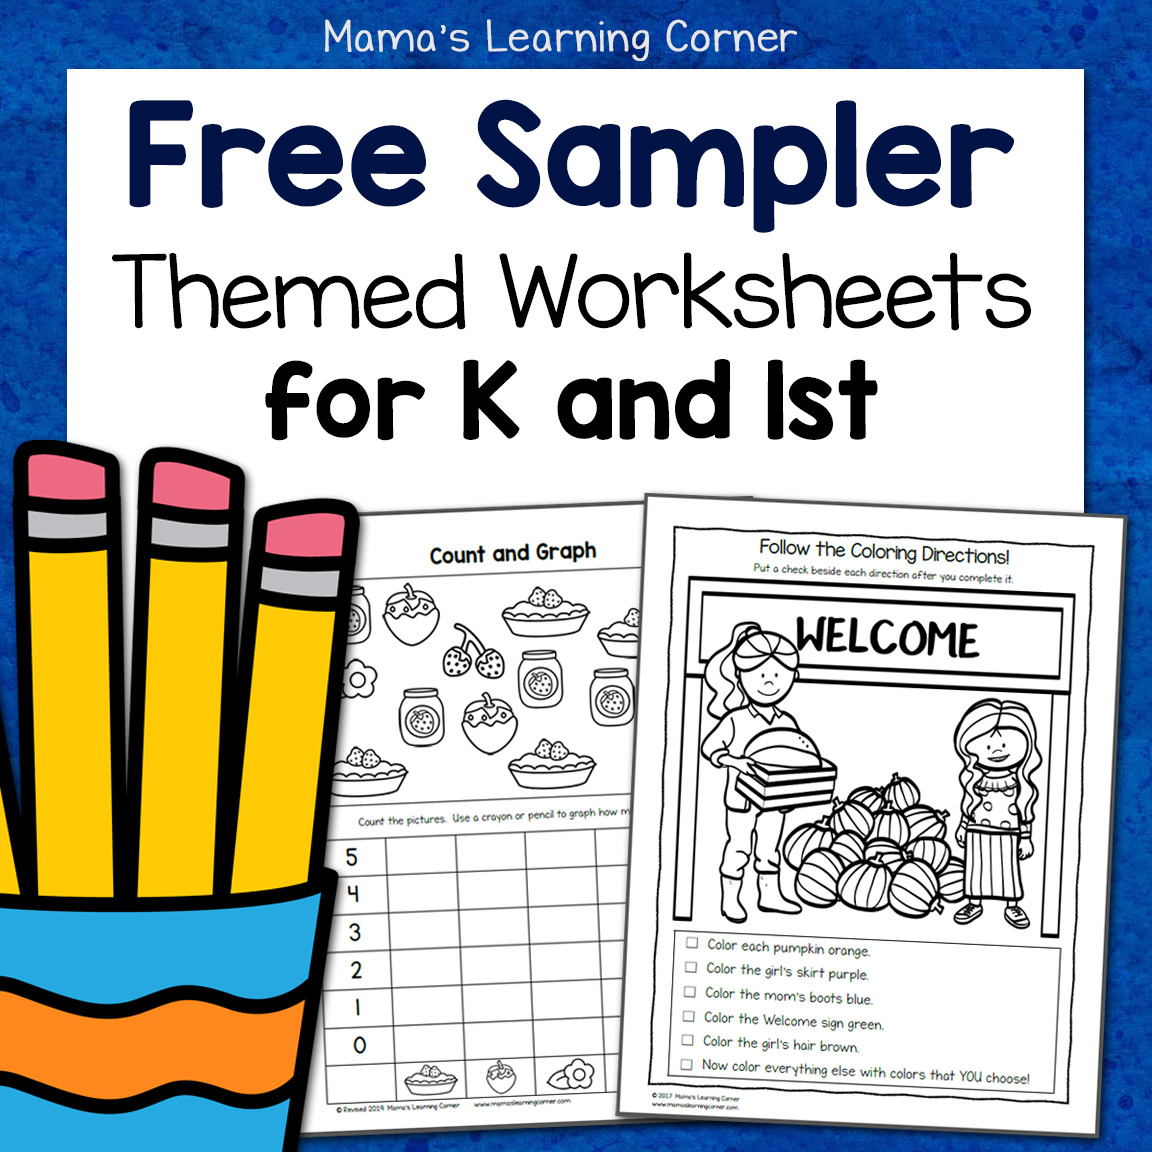 Free Kindergarten and First Grade Worksheet Sampler Packet - Mamas Intended For Following Directions Worksheet Kindergarten